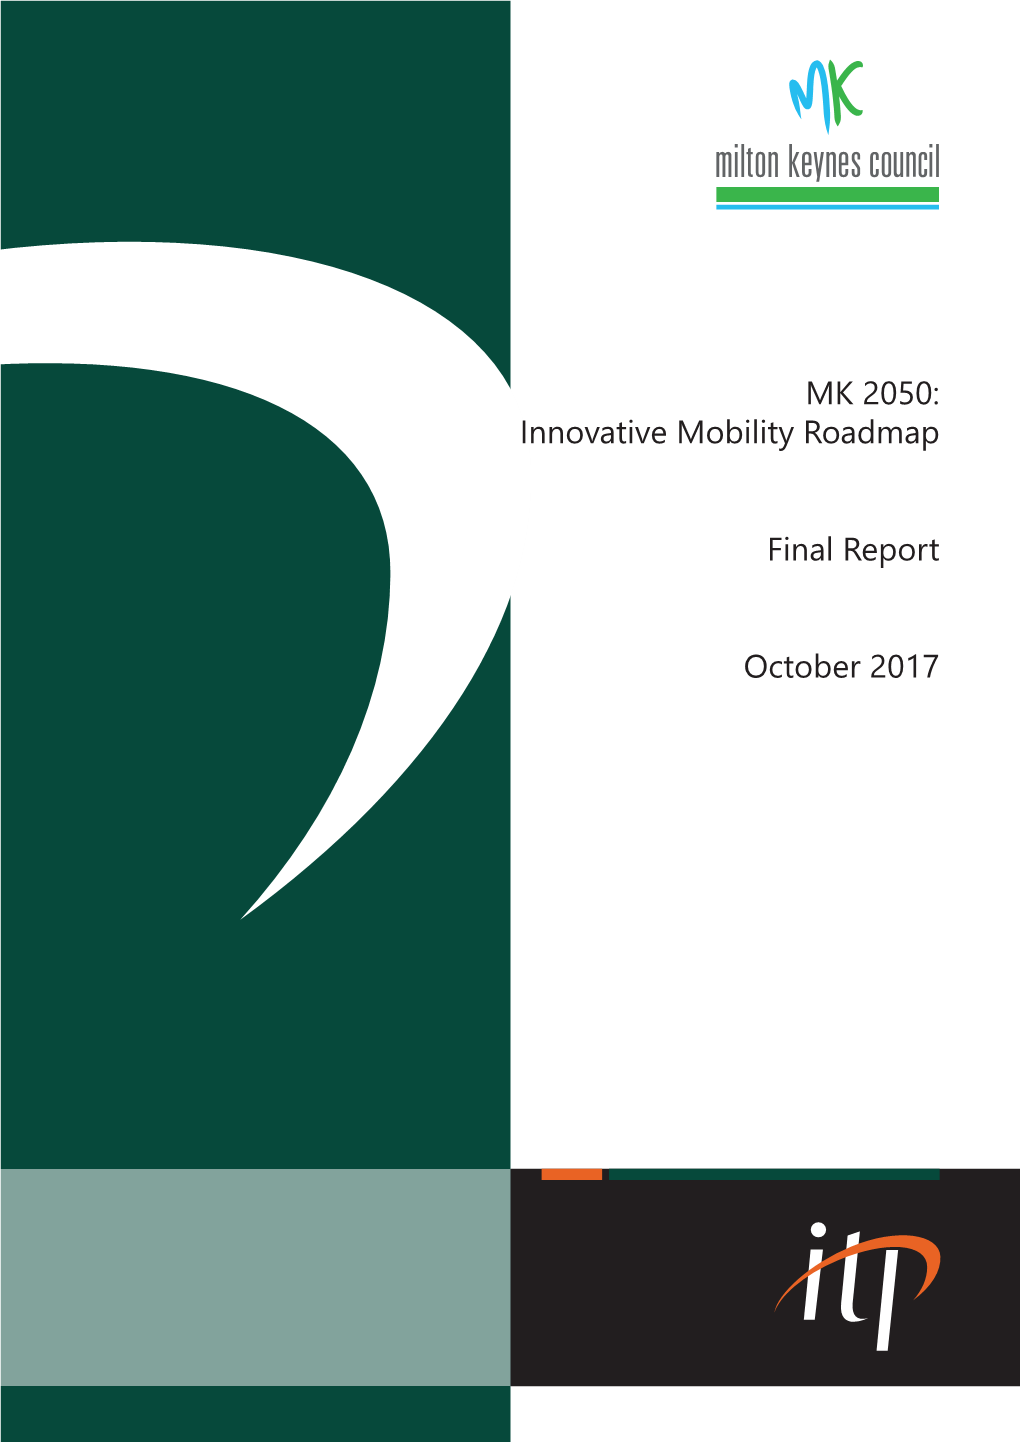 MK 2050: Innovative Mobility Roadmap Final Report October 2017